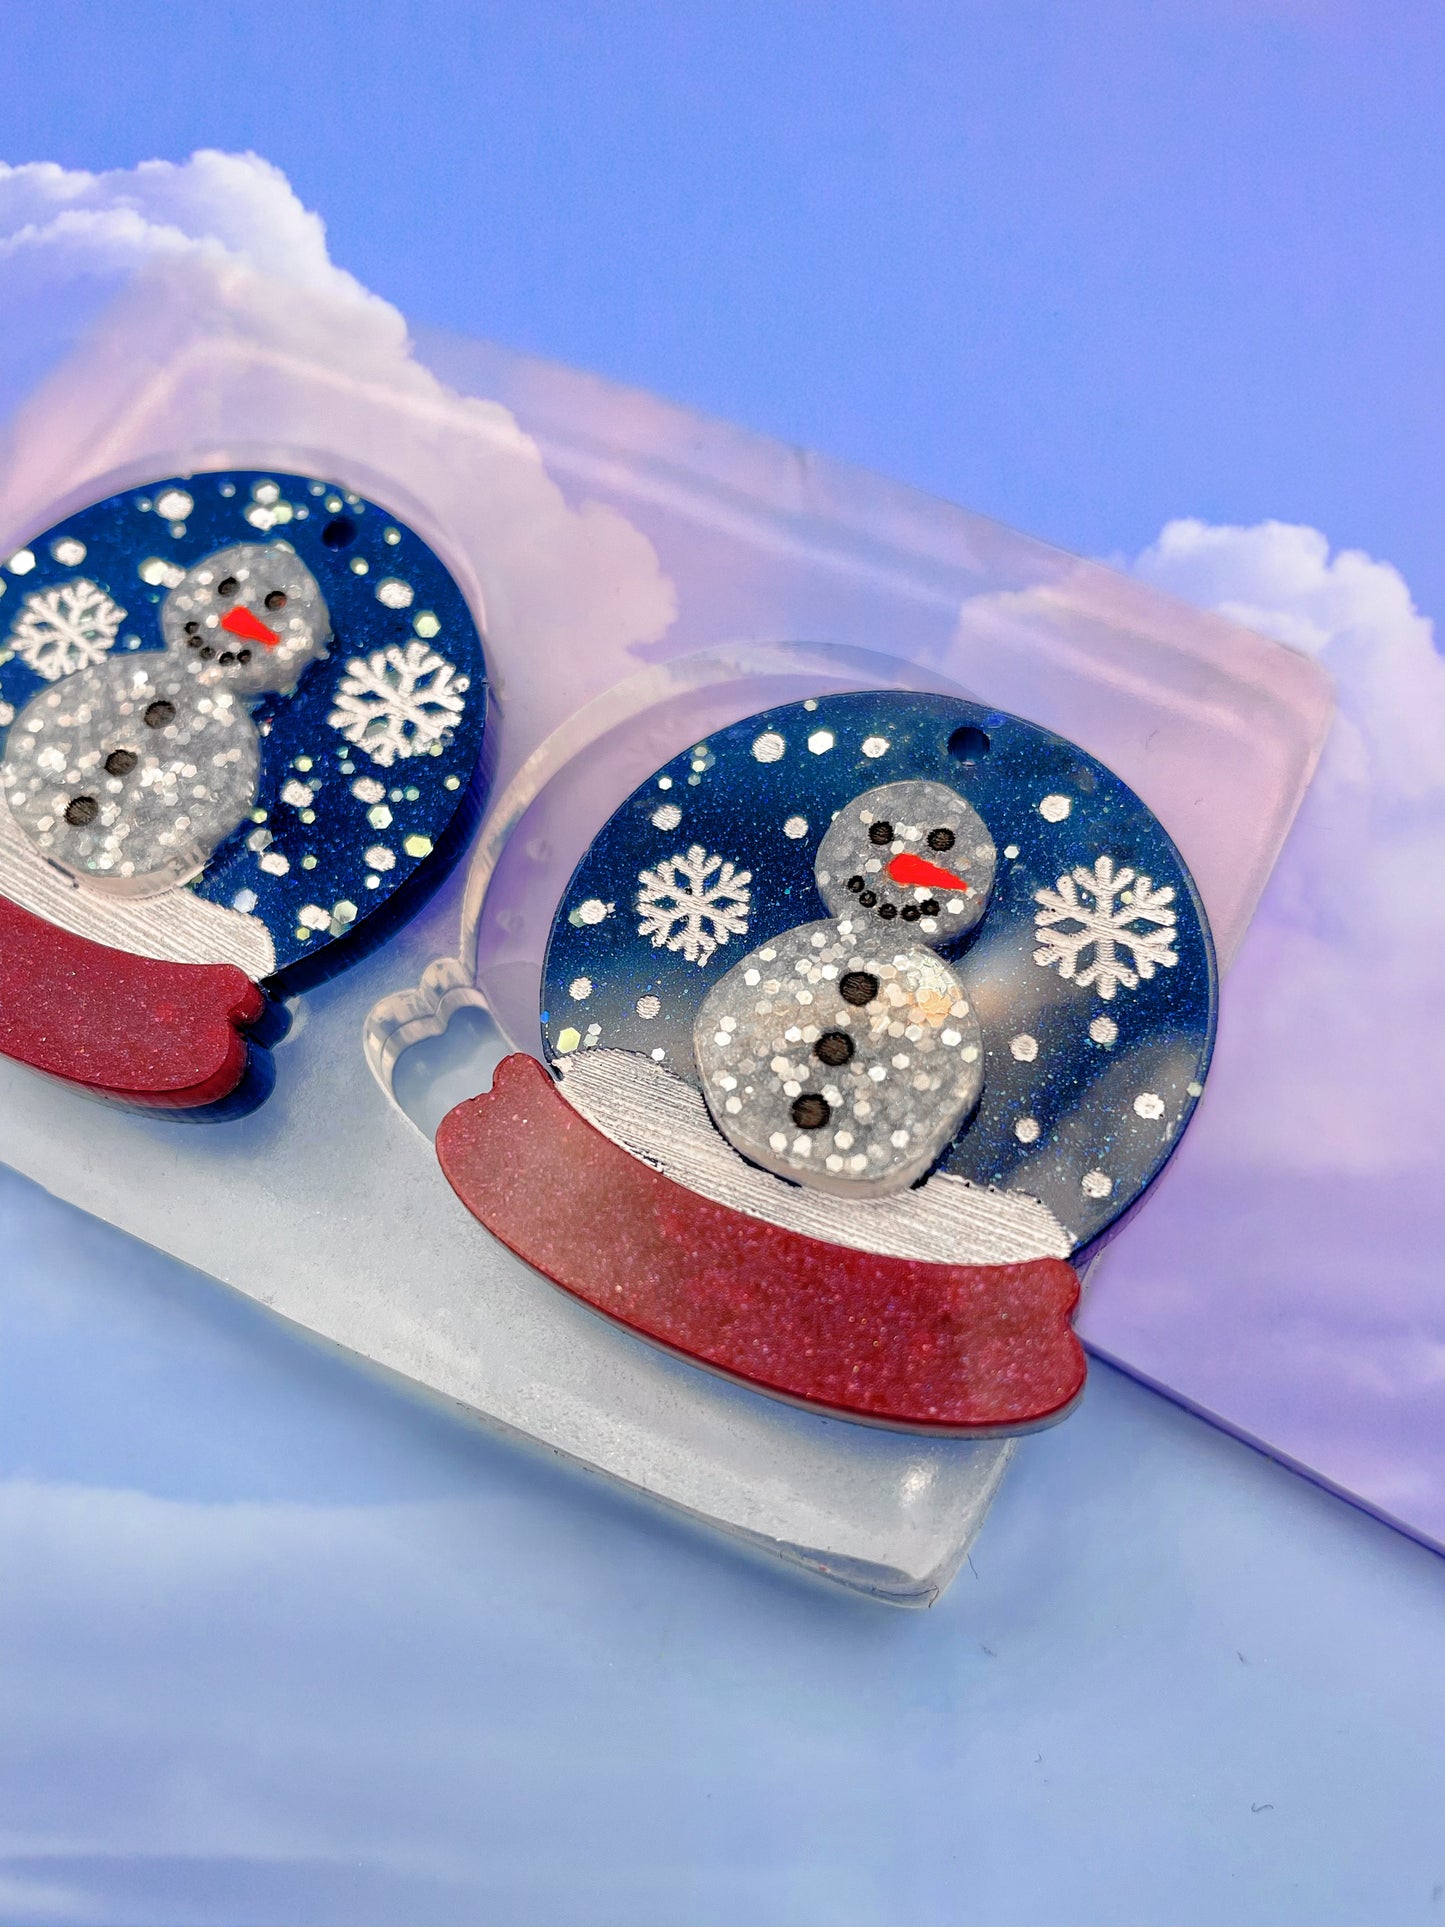 Original Snowglobe Jewellery Mold Perfect for Christmas